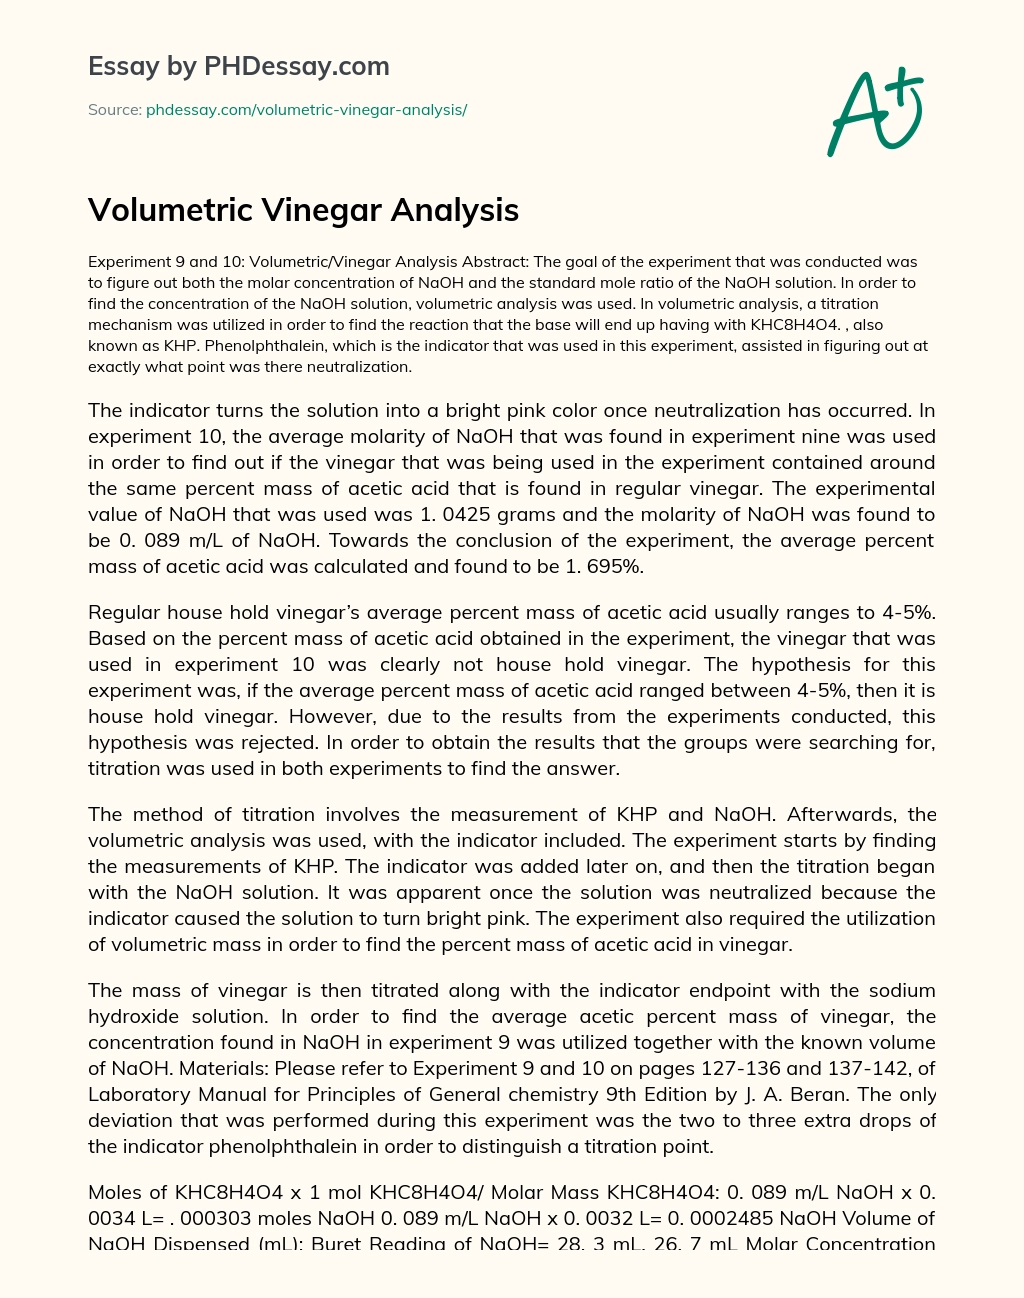 Volumetric Vinegar Analysis essay